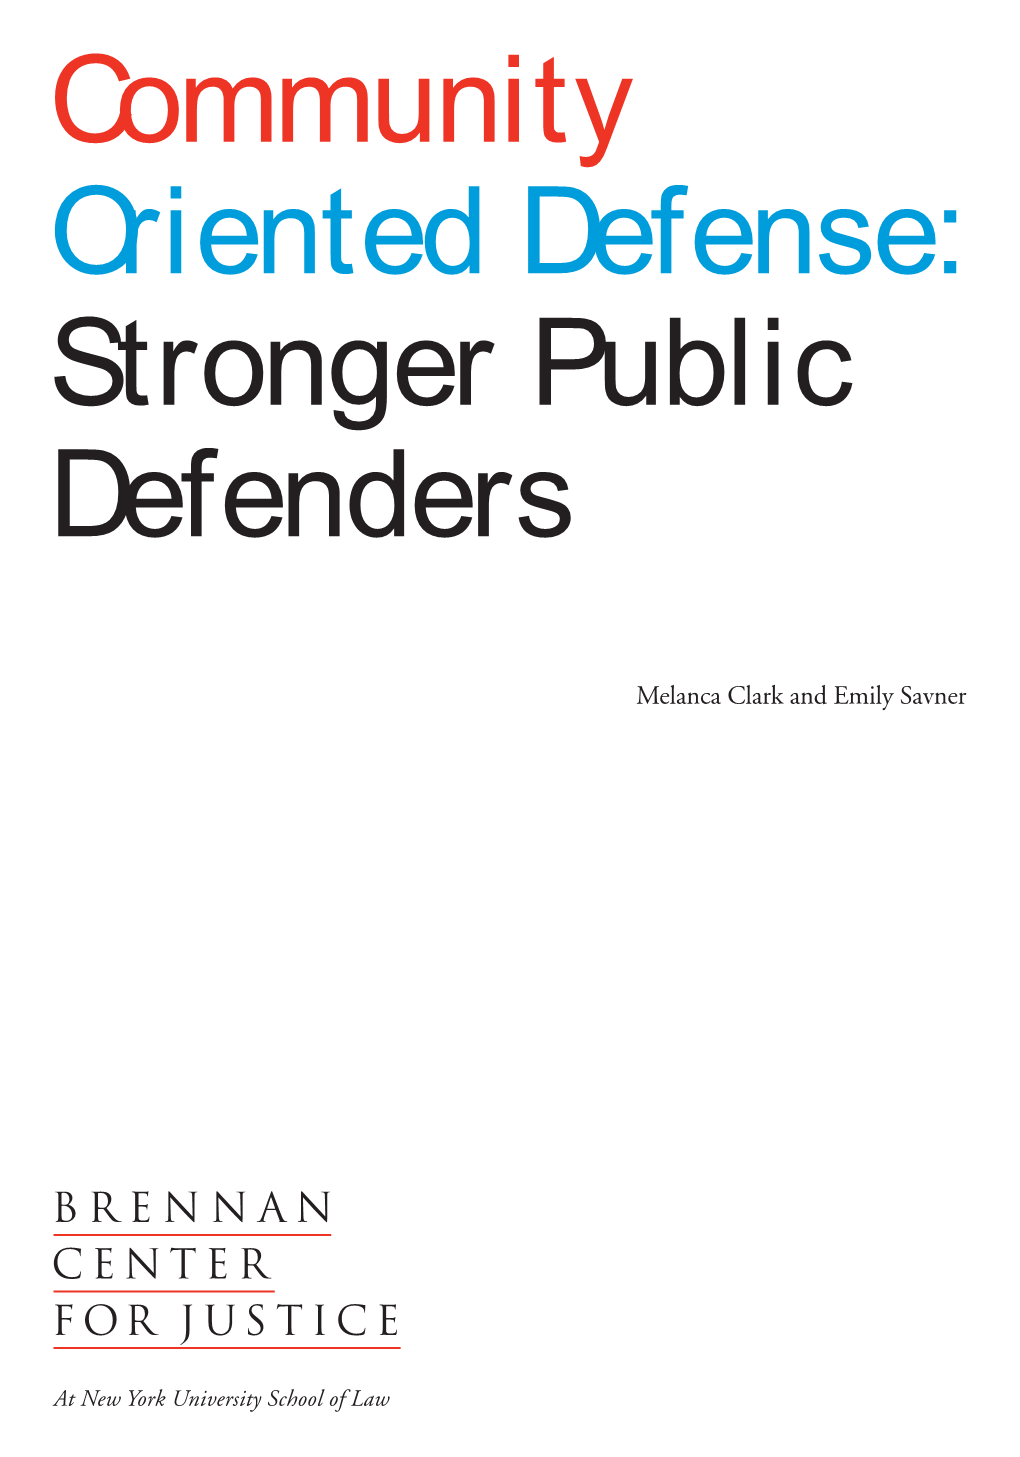 Community Oriented Defense: Stronger Public Defenders